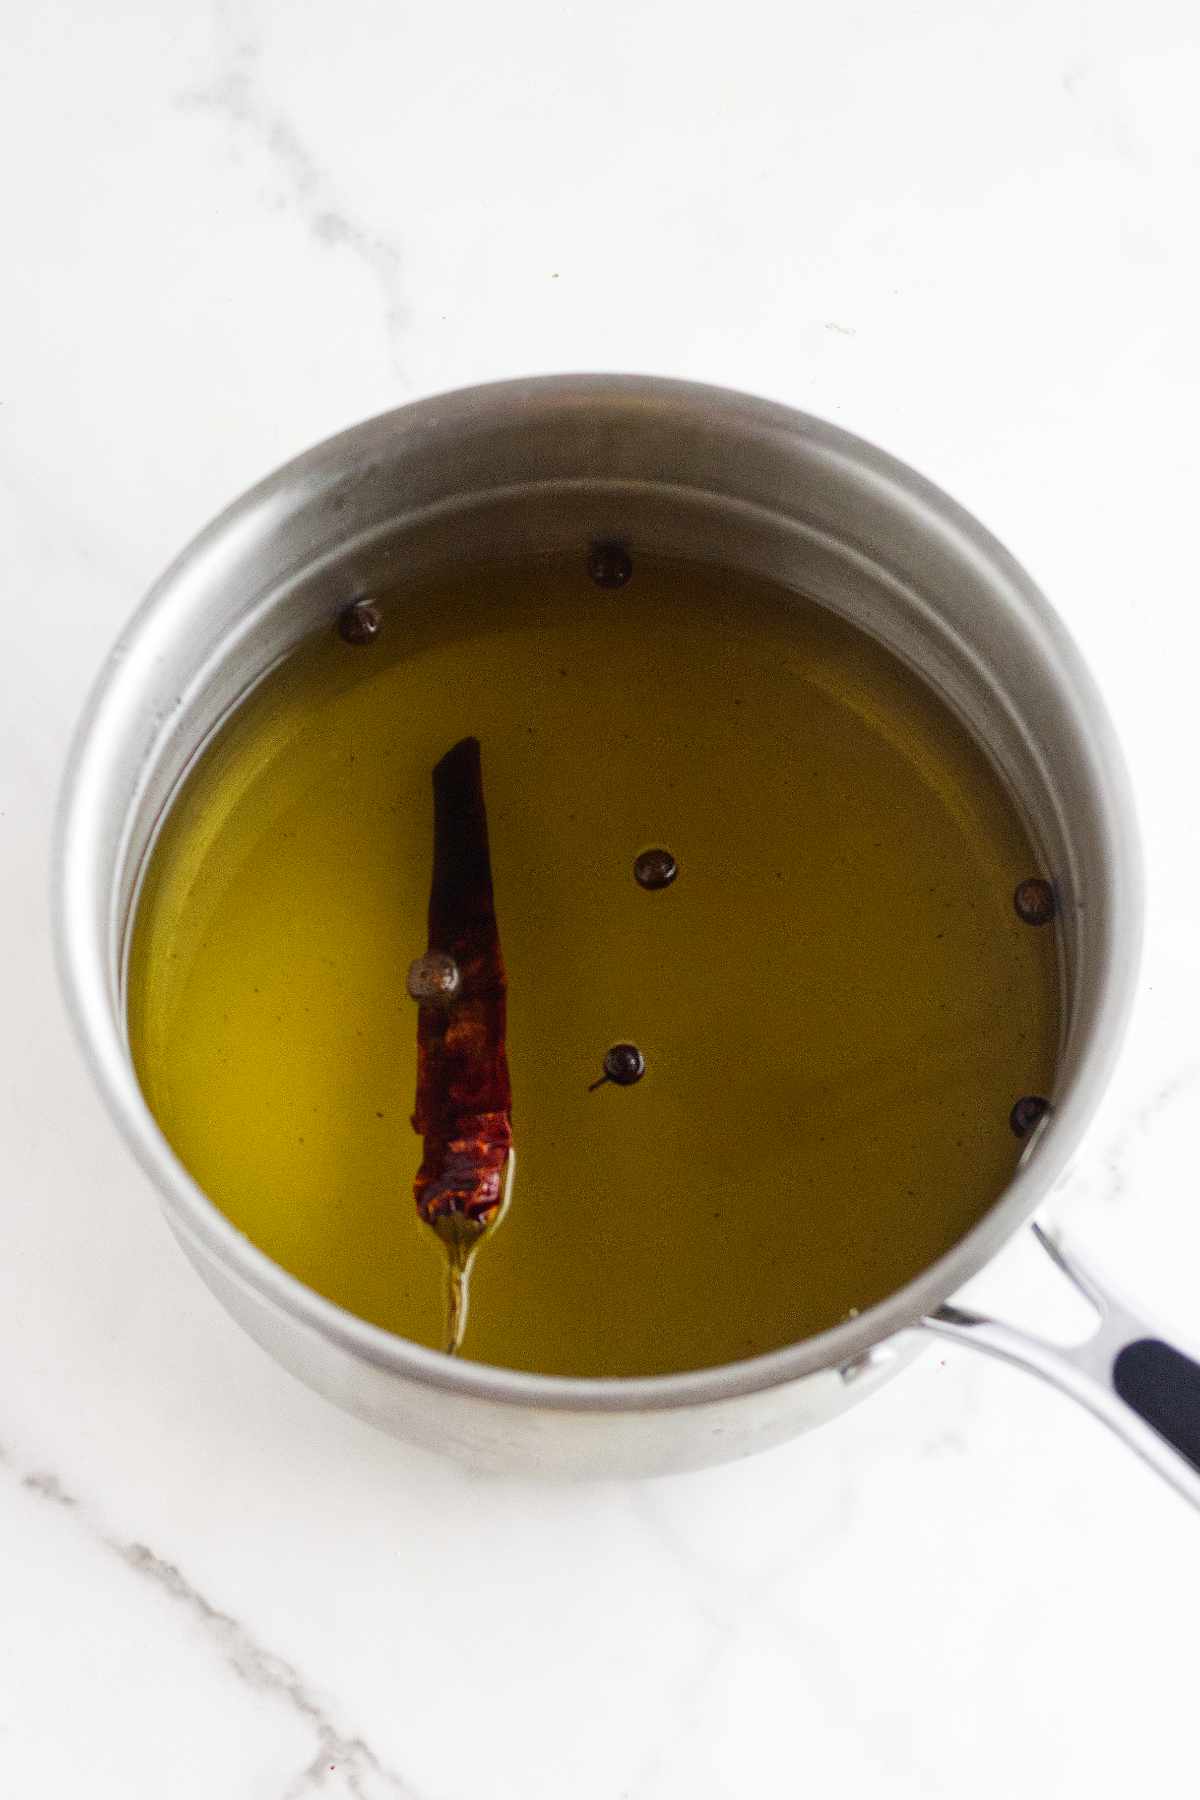 pickling brine in a sauce pan.